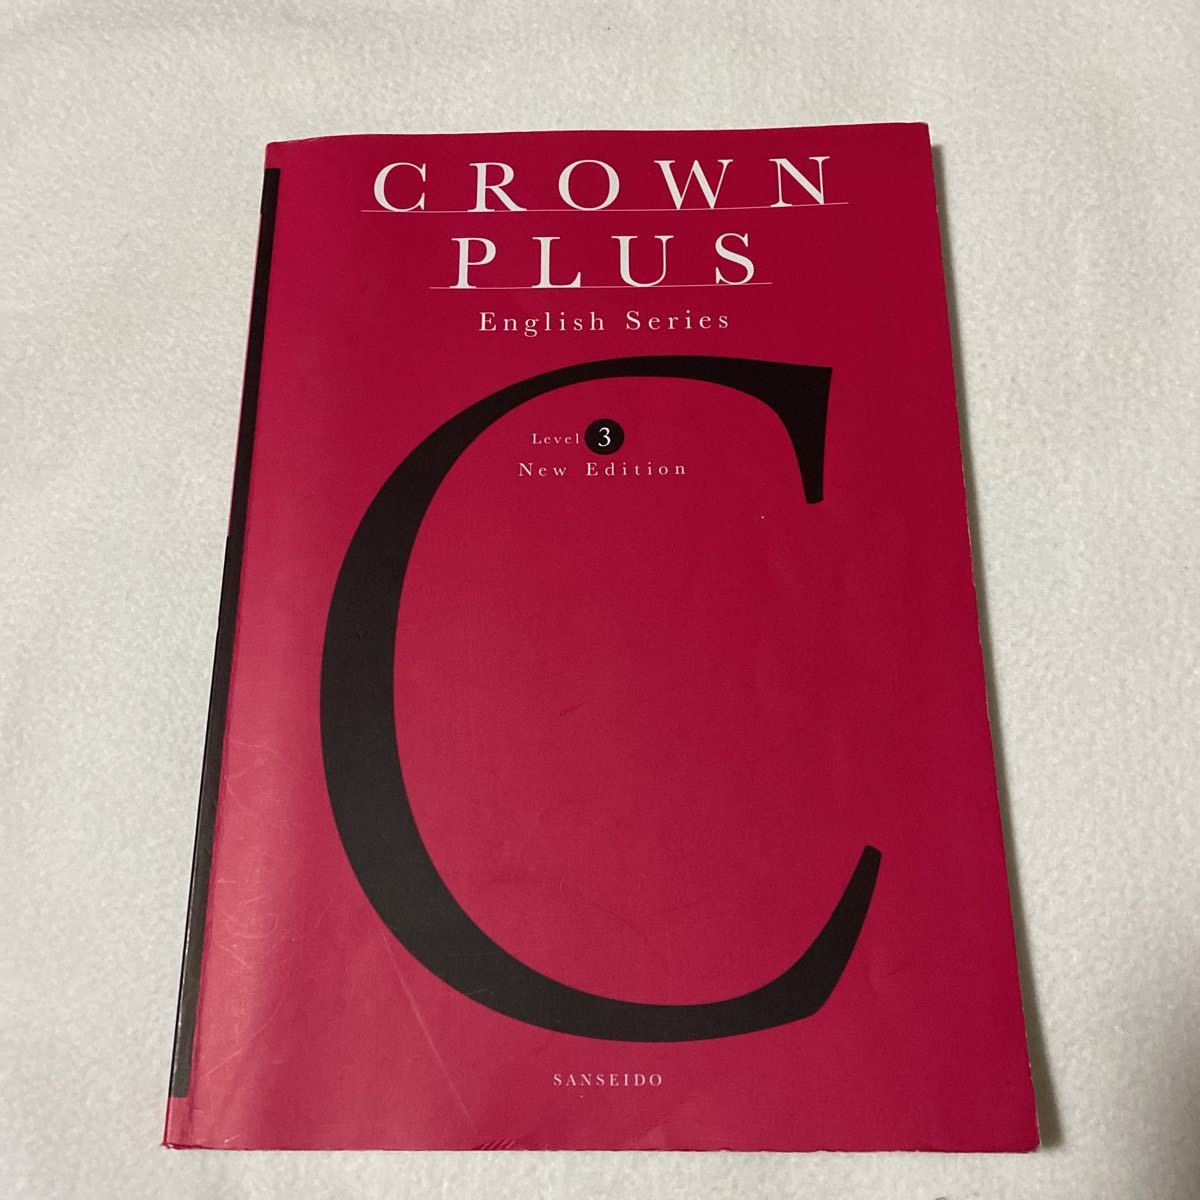 「CROWN PLUS English Series Level3」 山本史郎 / Wilson